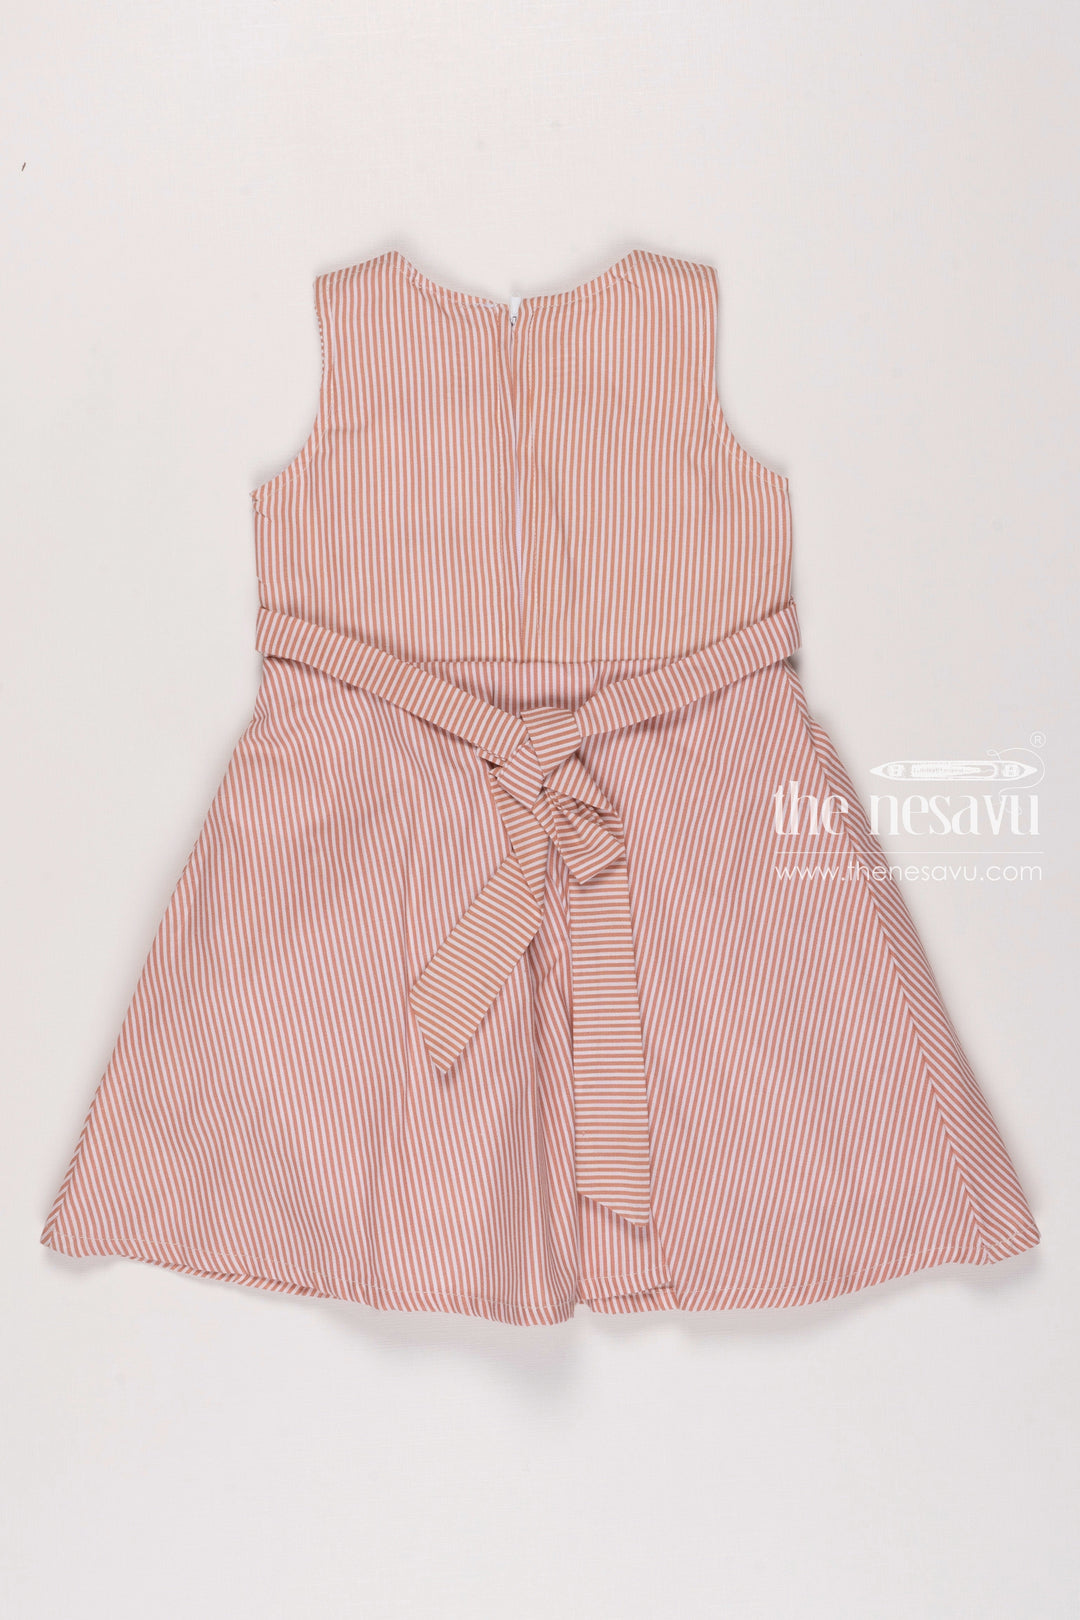 The Nesavu Girls Fancy Frock Classic Pink Striped Latest Cotton Frock Gown Design for Girls Nesavu Girls Sleeveless Pink Striped Dress | Lightweight Summer Frock | The Nesavu